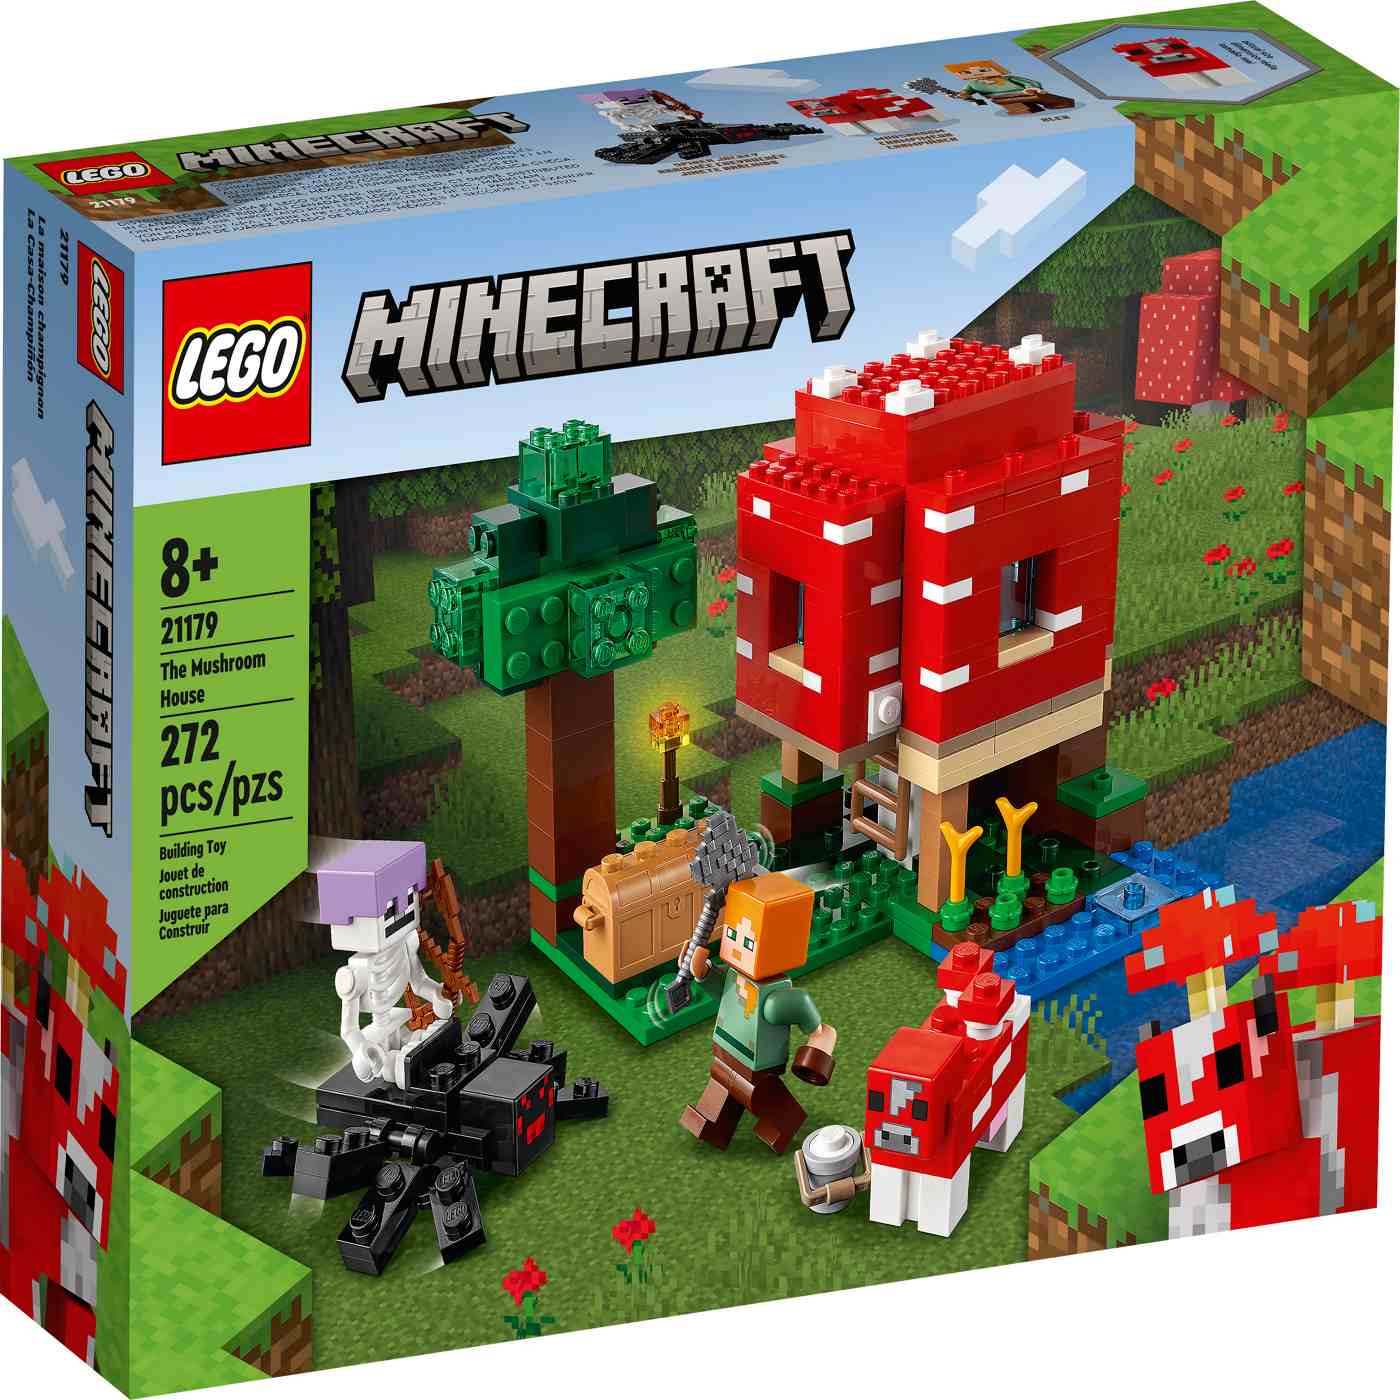 Building LEGO Minecraft Sets in Minecraft